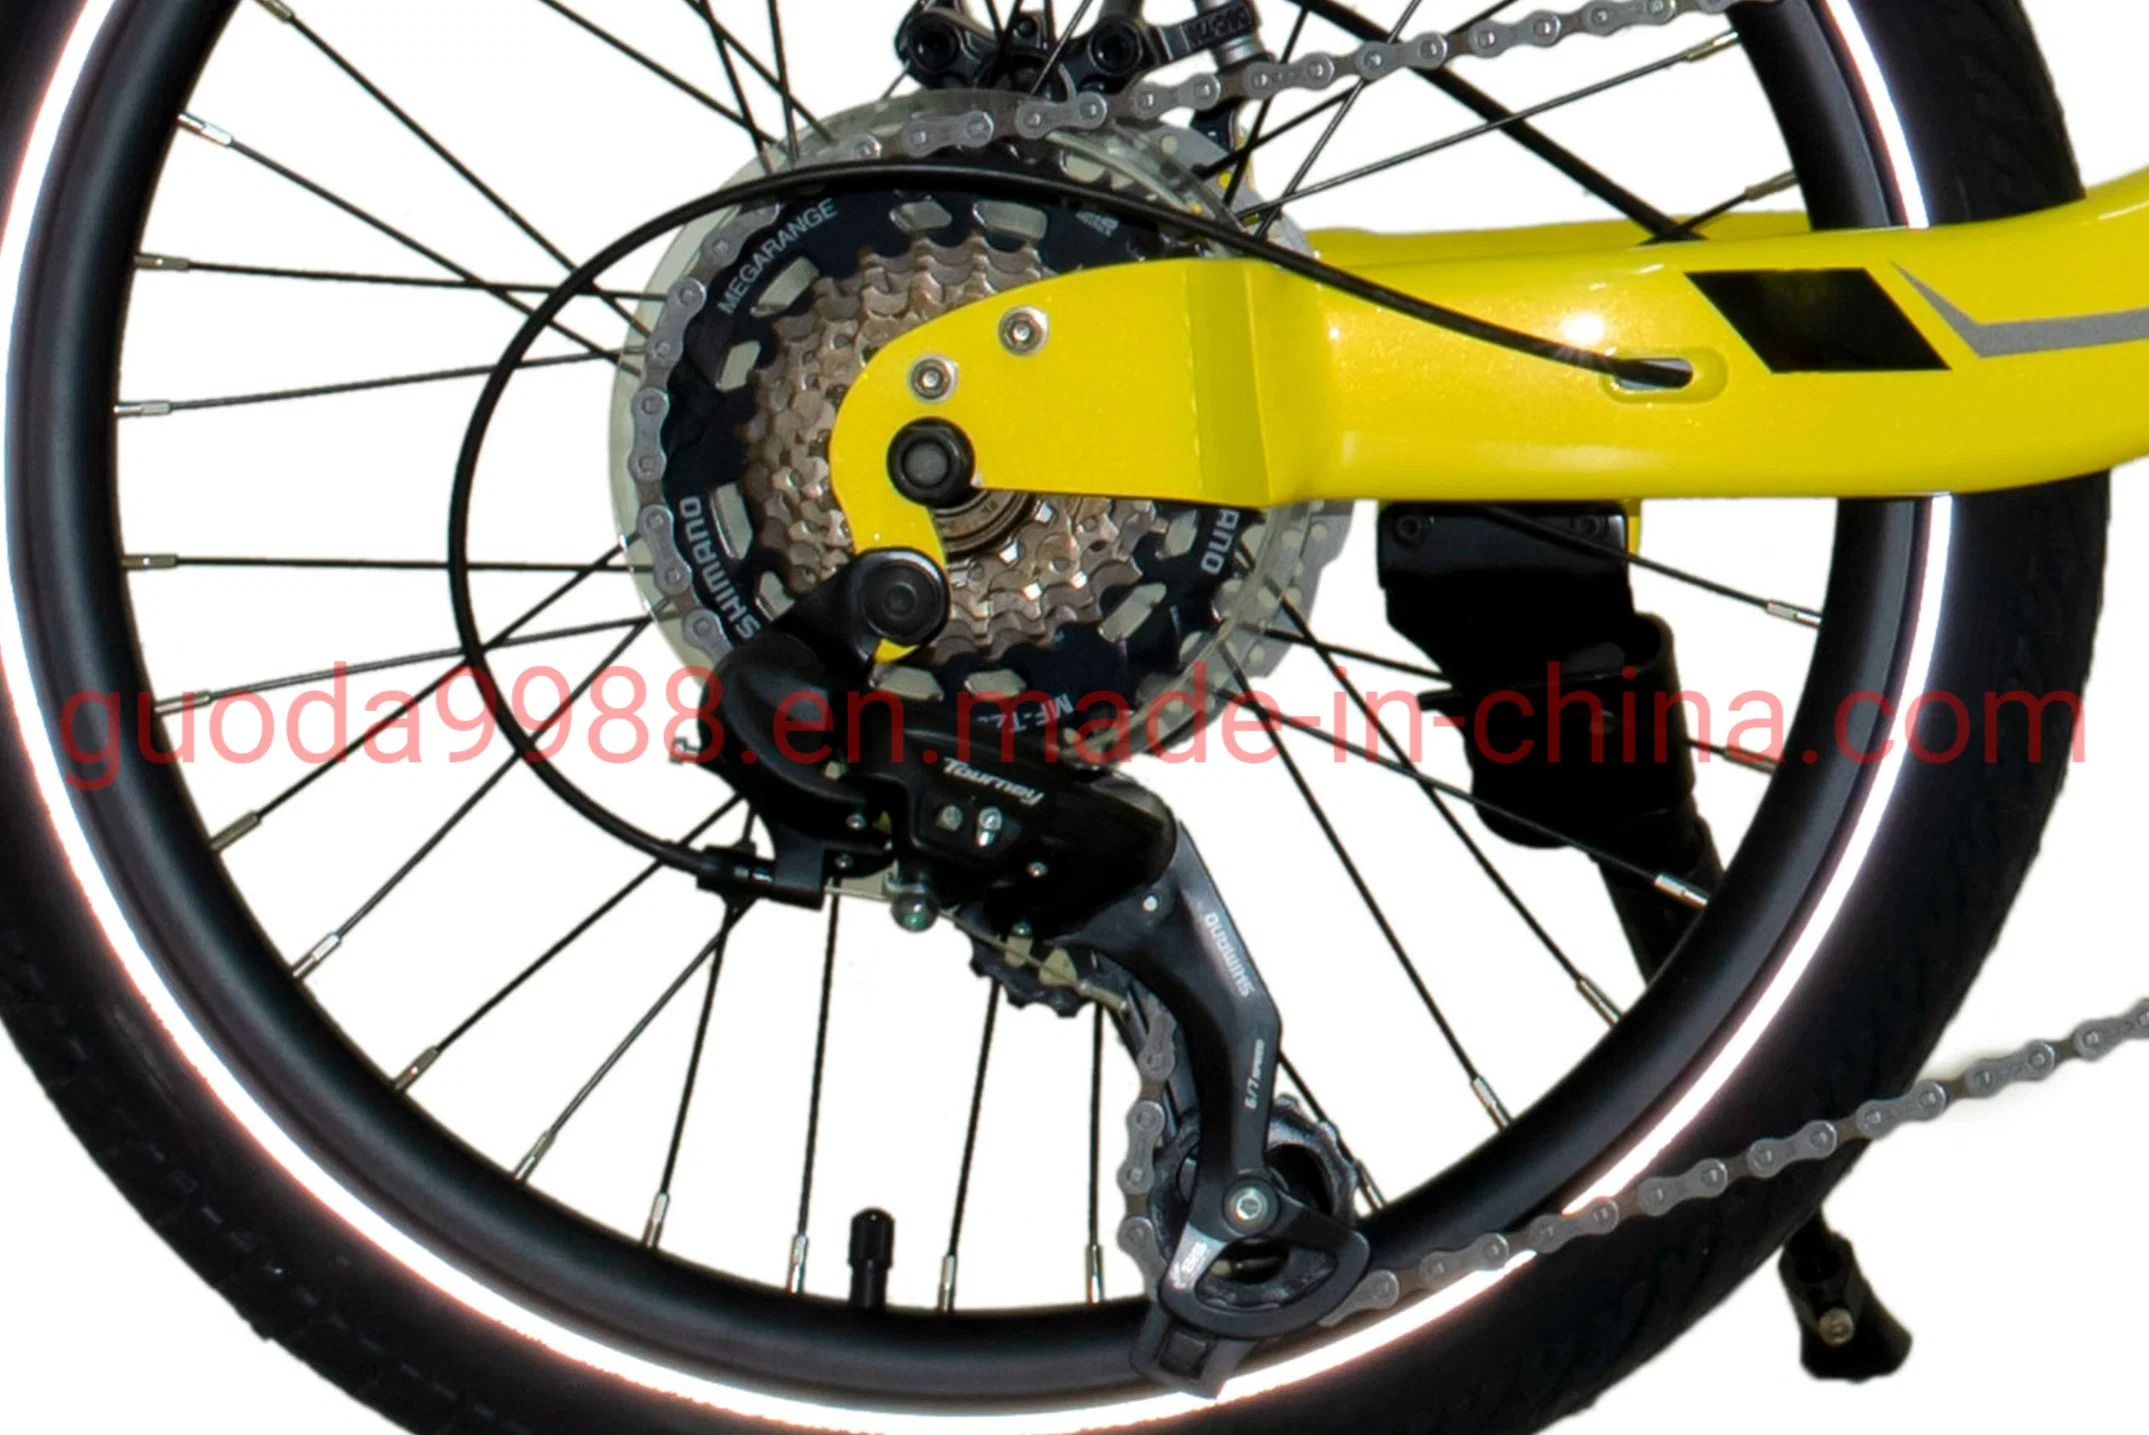 Alloy Folding Mini Bike 20" Lithium Bicycle Electric Ebike CE